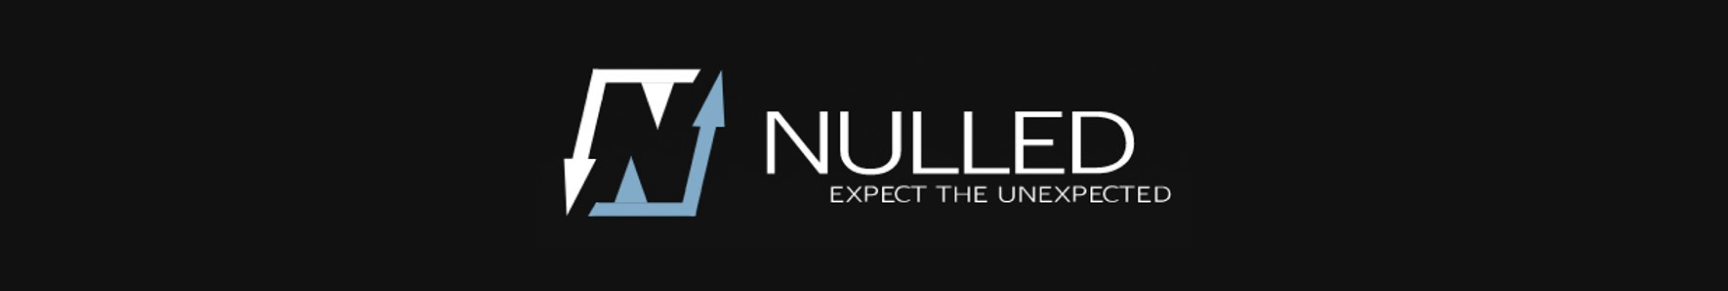 Nulled forum logo